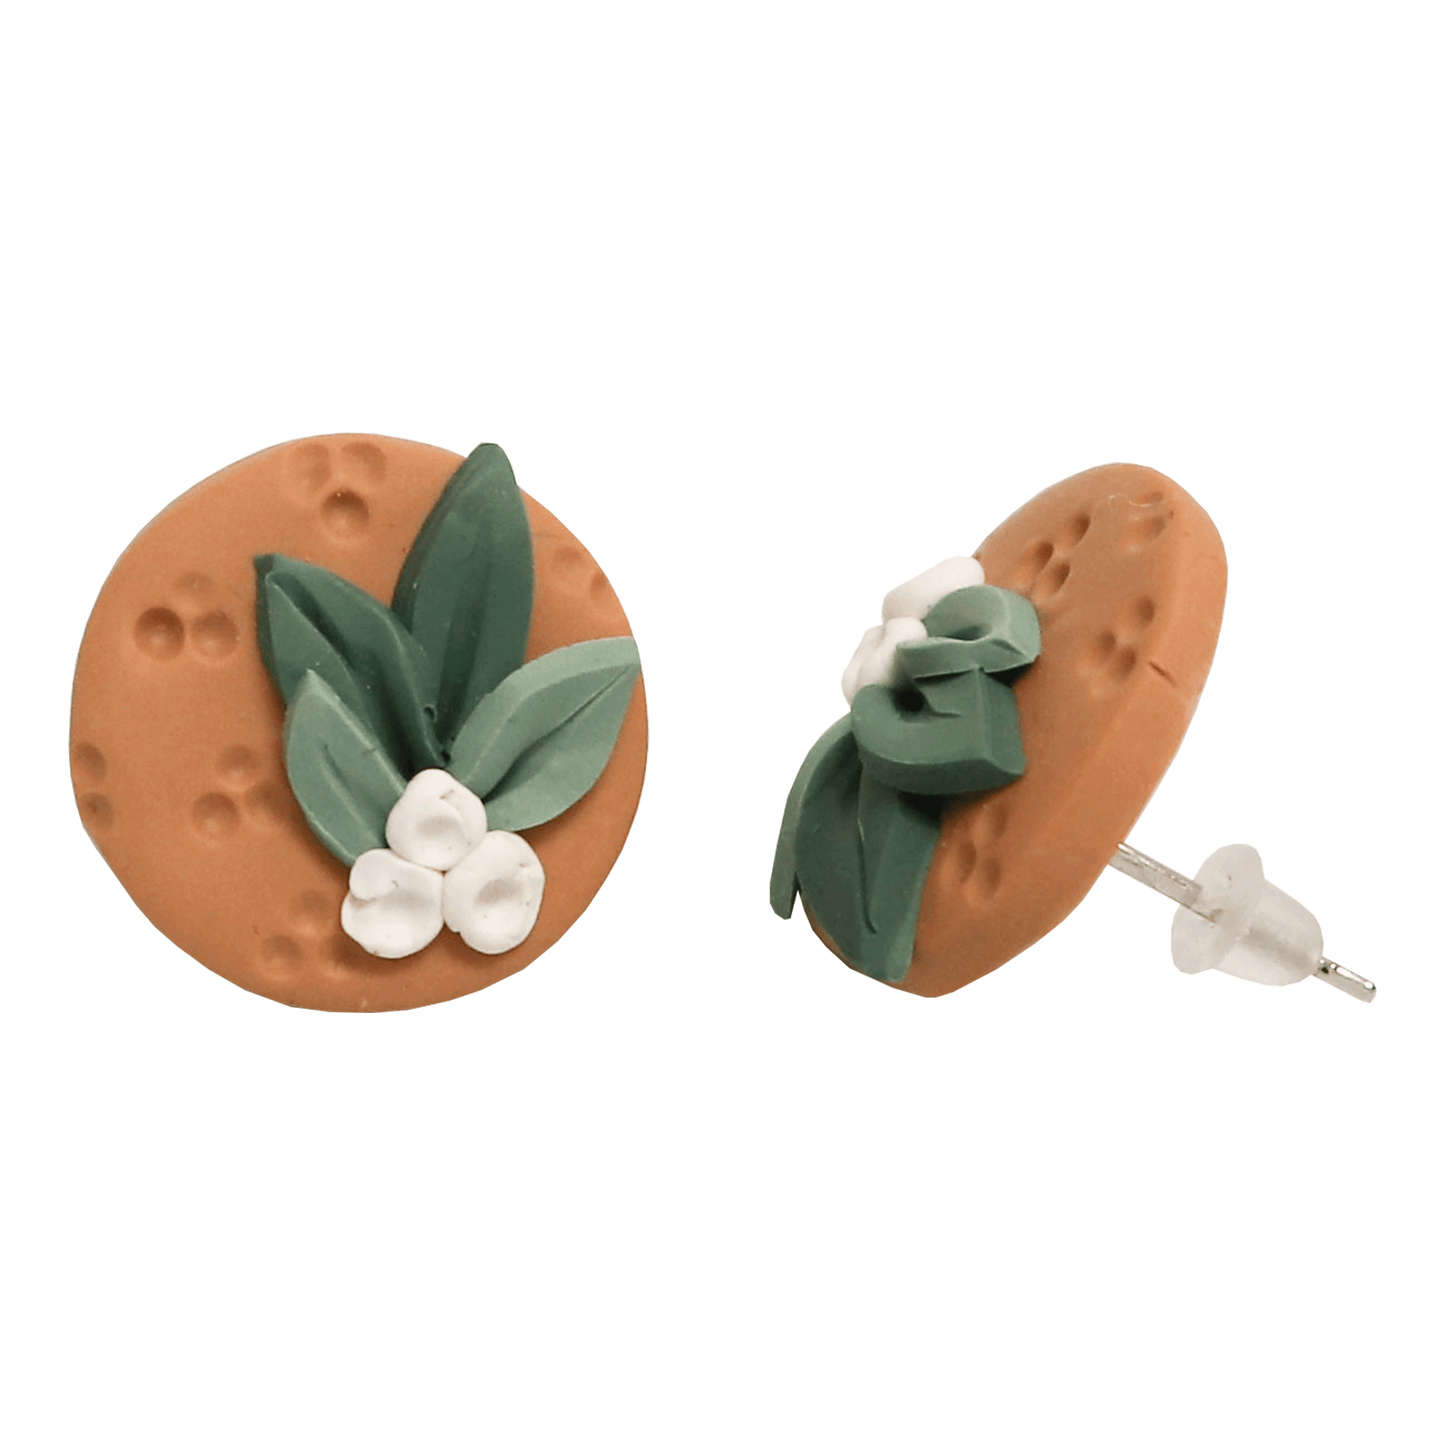 Flower Clay Stud Earrings